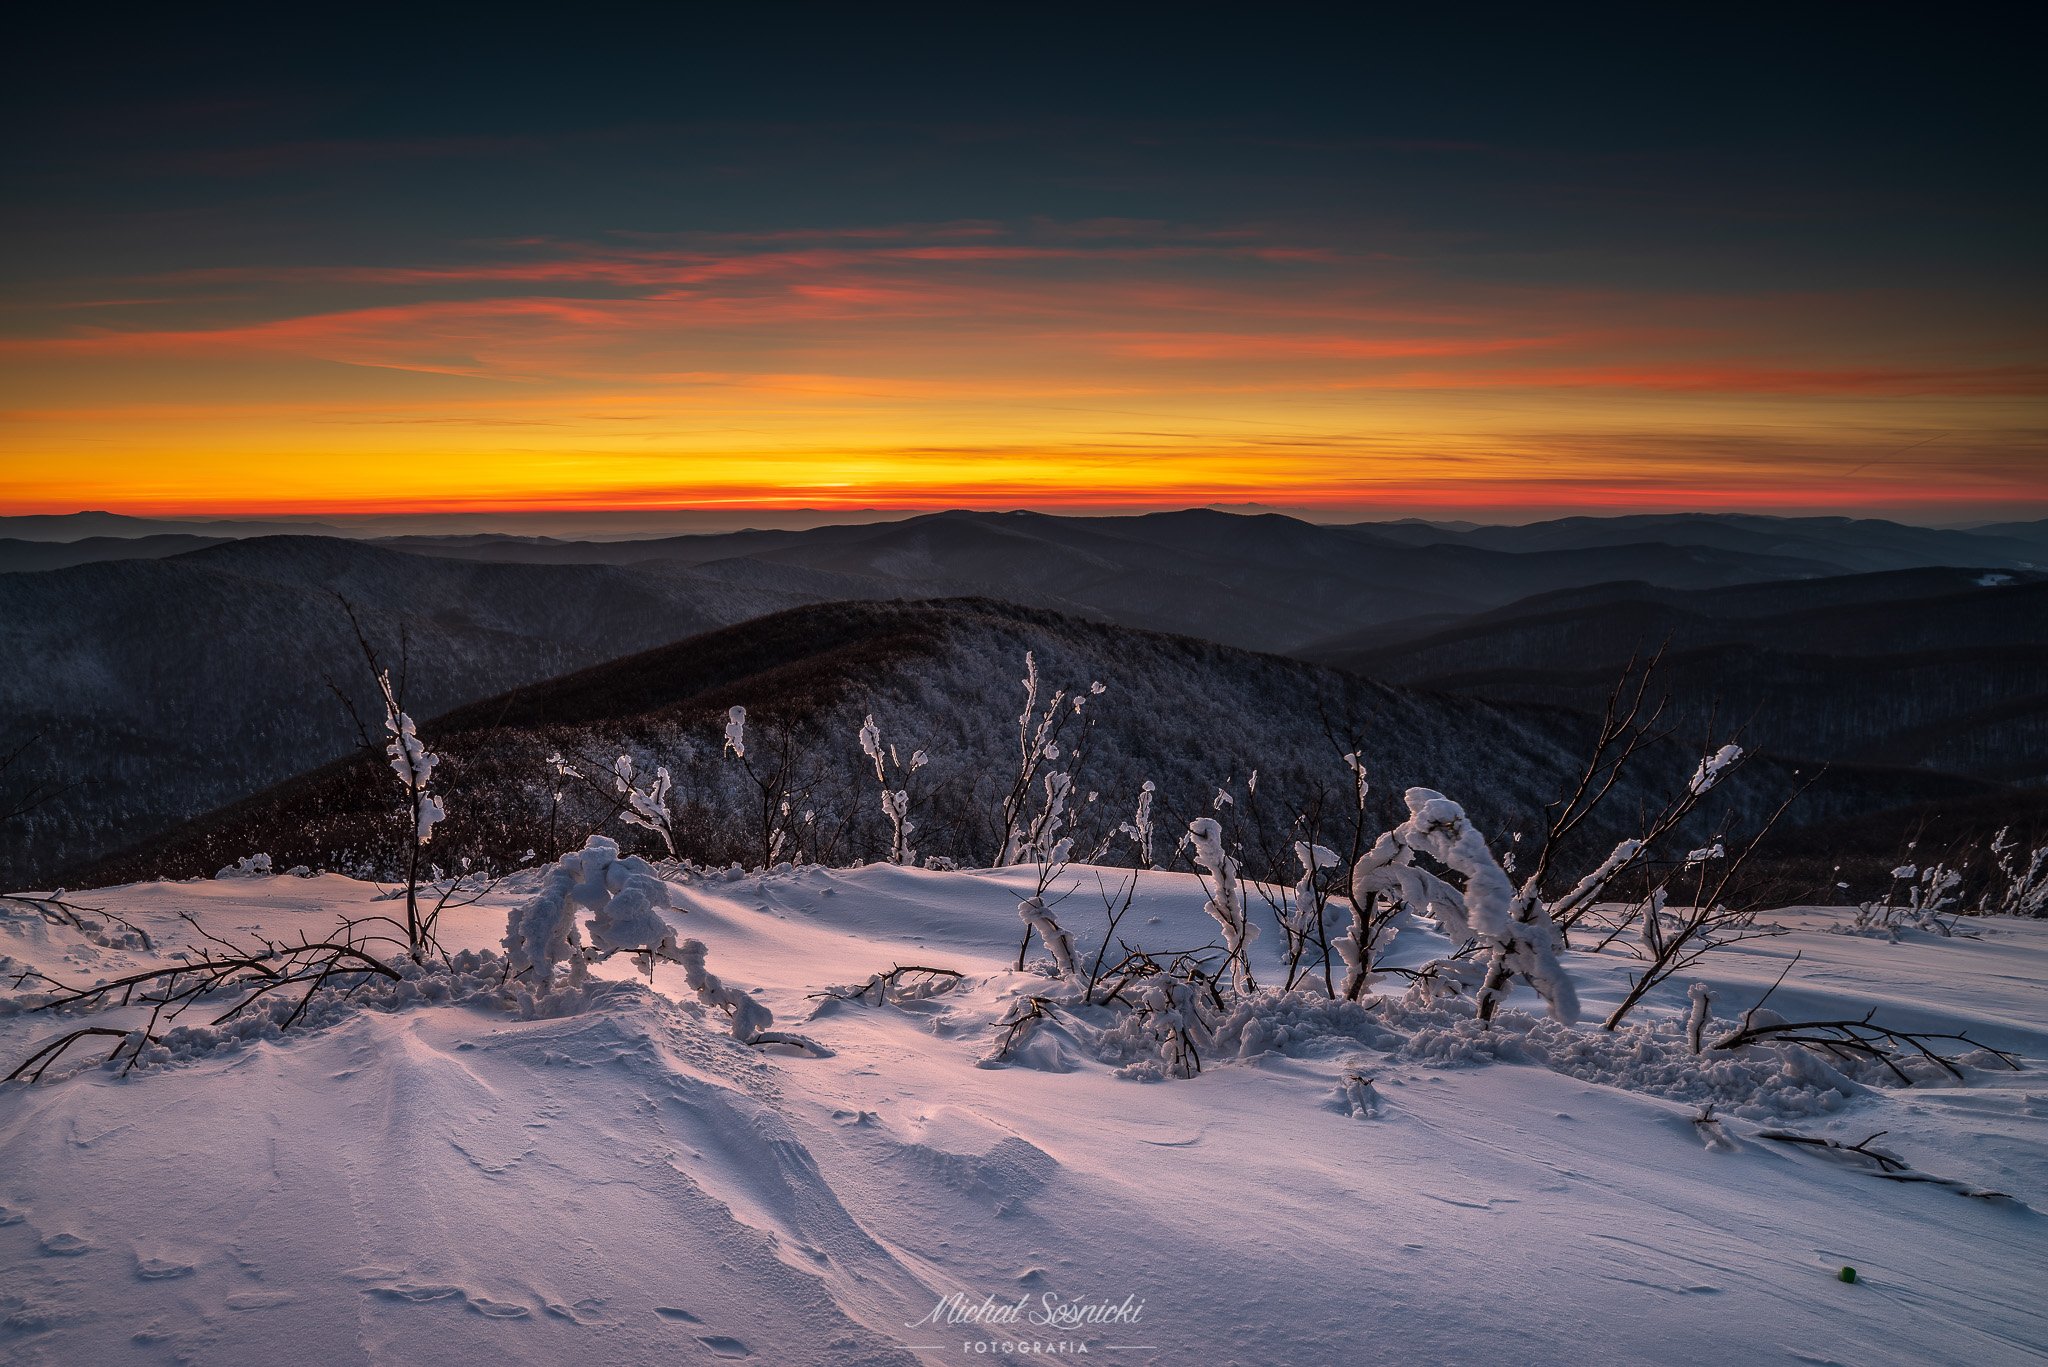 #mountains #bieszczady #winter #snow #photo #sky #poland #pentax #benro #benq #sunset, Michał Sośnicki